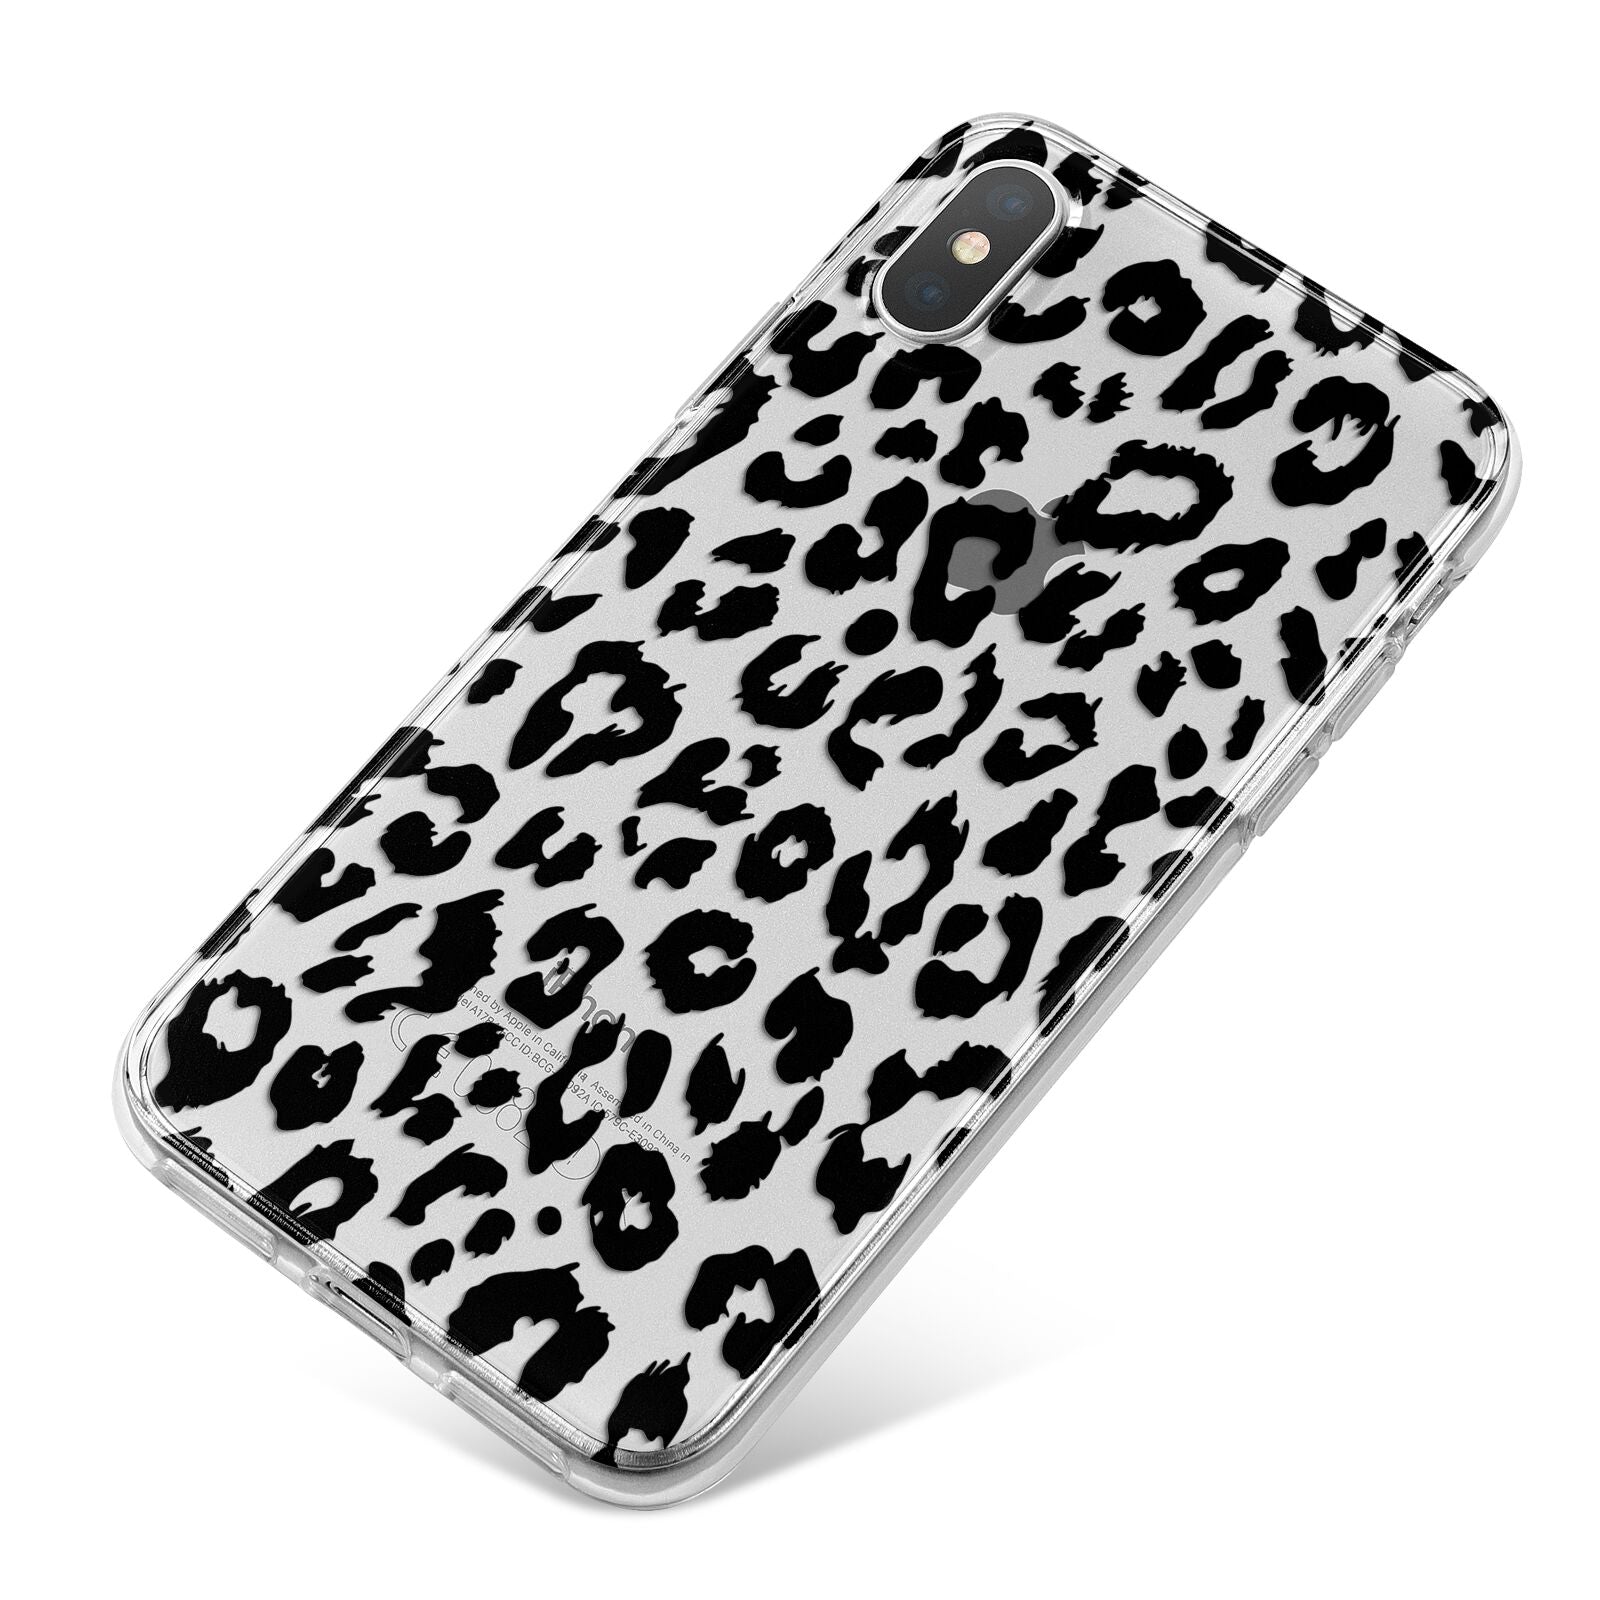 Black Leopard Print iPhone X Bumper Case on Silver iPhone